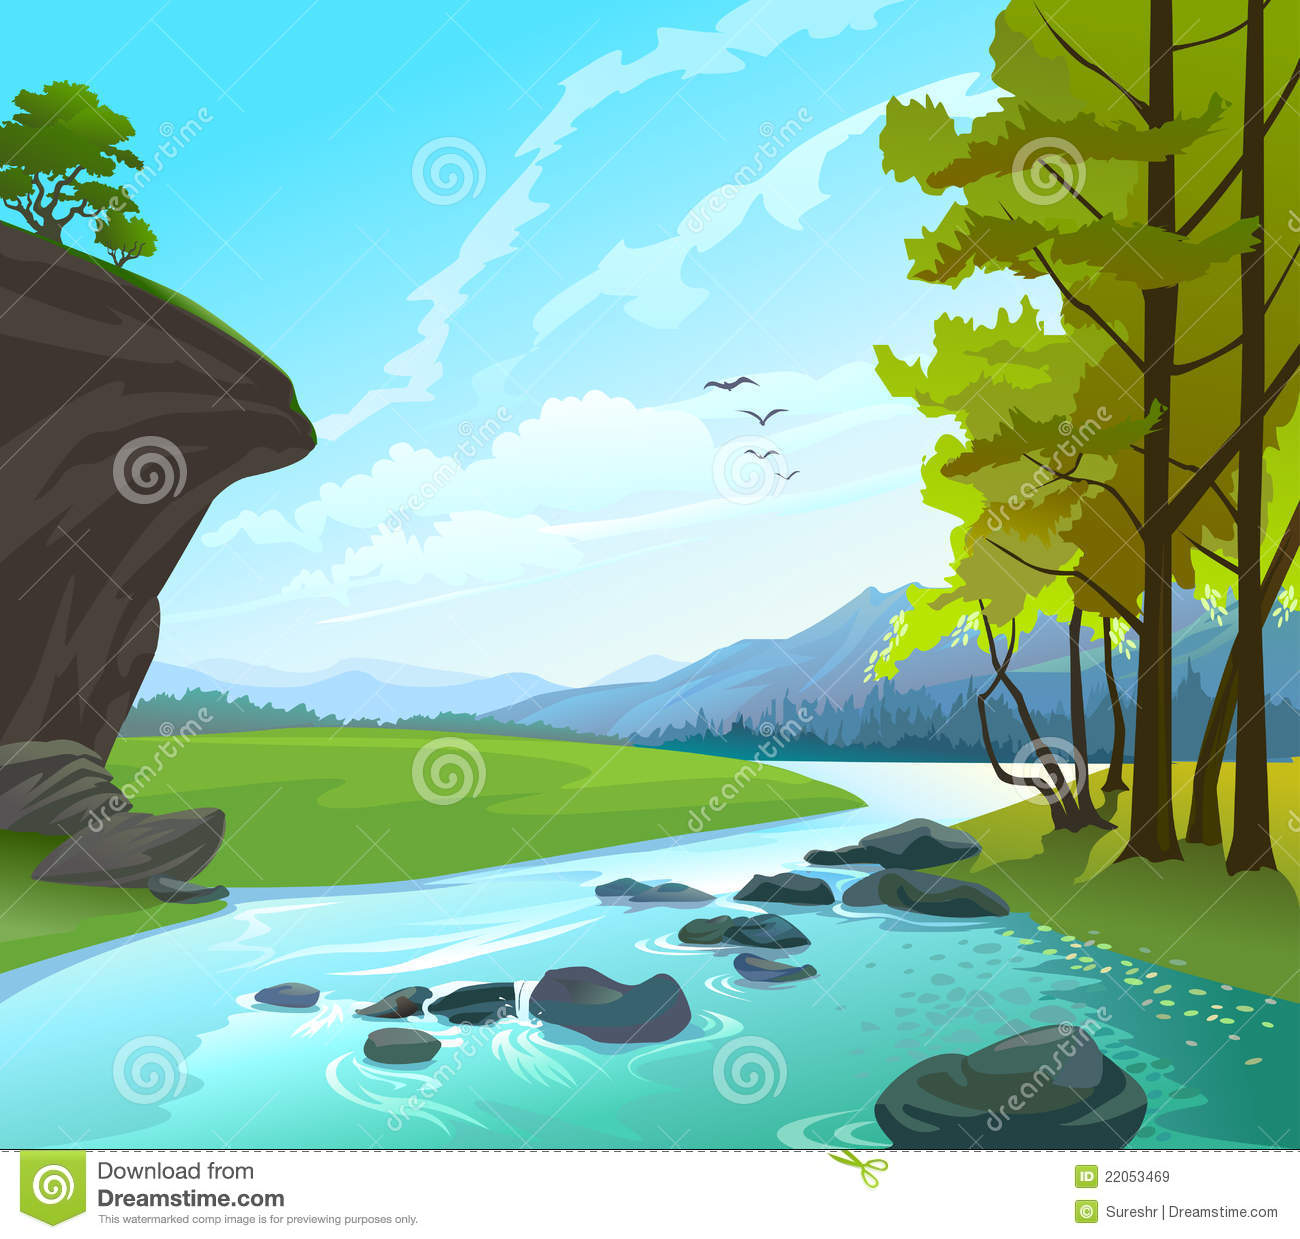 River  Hills And Rocks Landscape Royalty Free Stock Images   Image